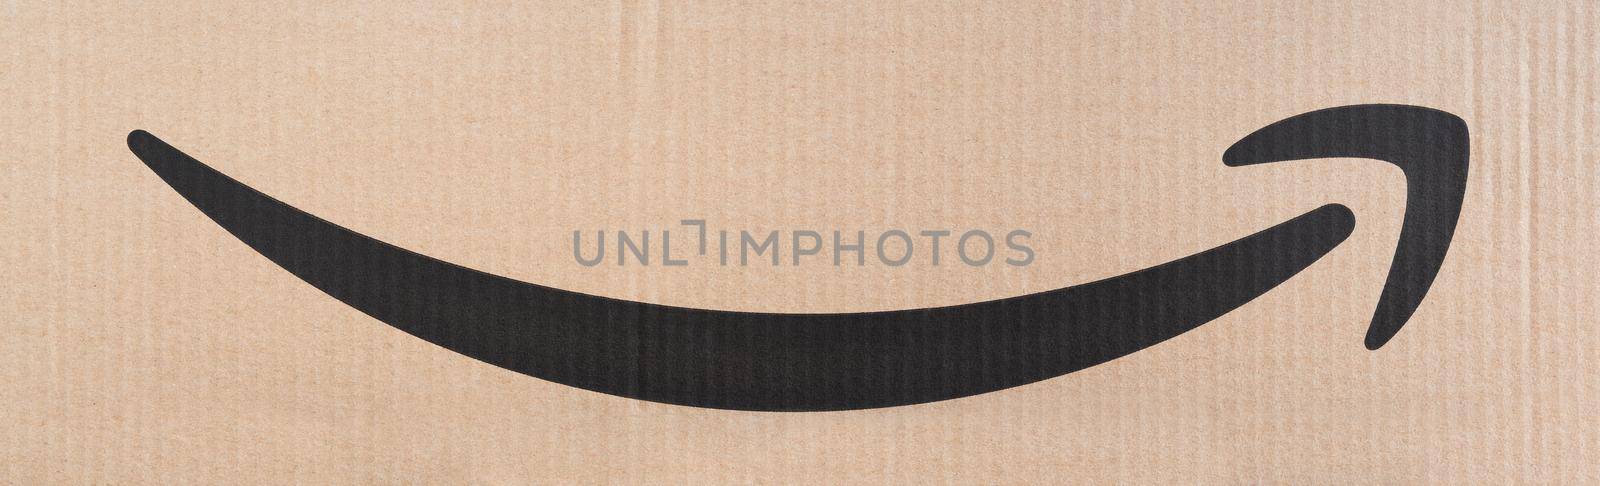 Amazon logo on cardboard box by dutourdumonde